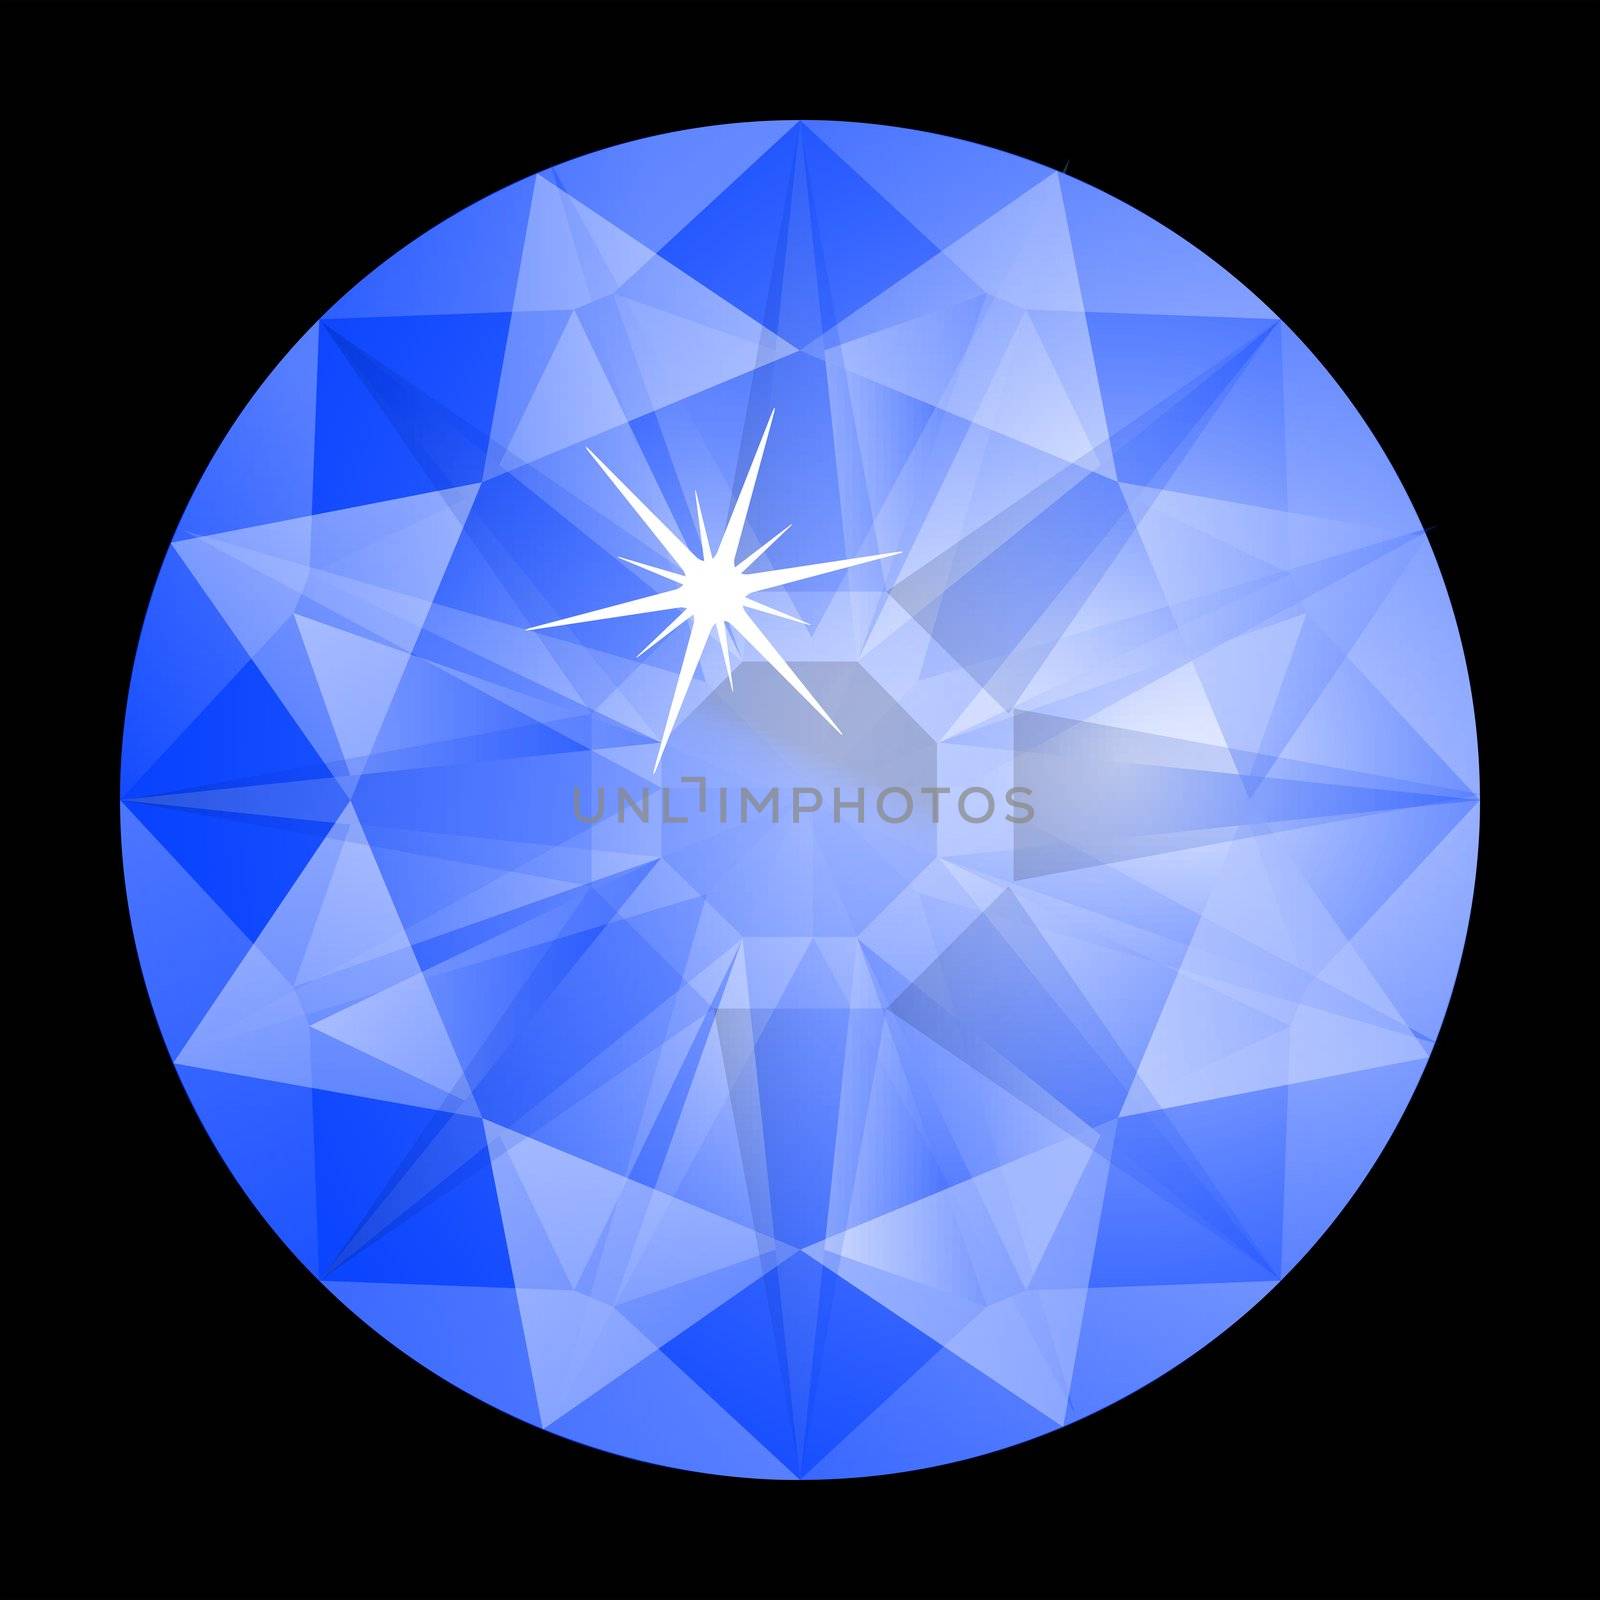 blue diamond against black background, abstract vector art illustration